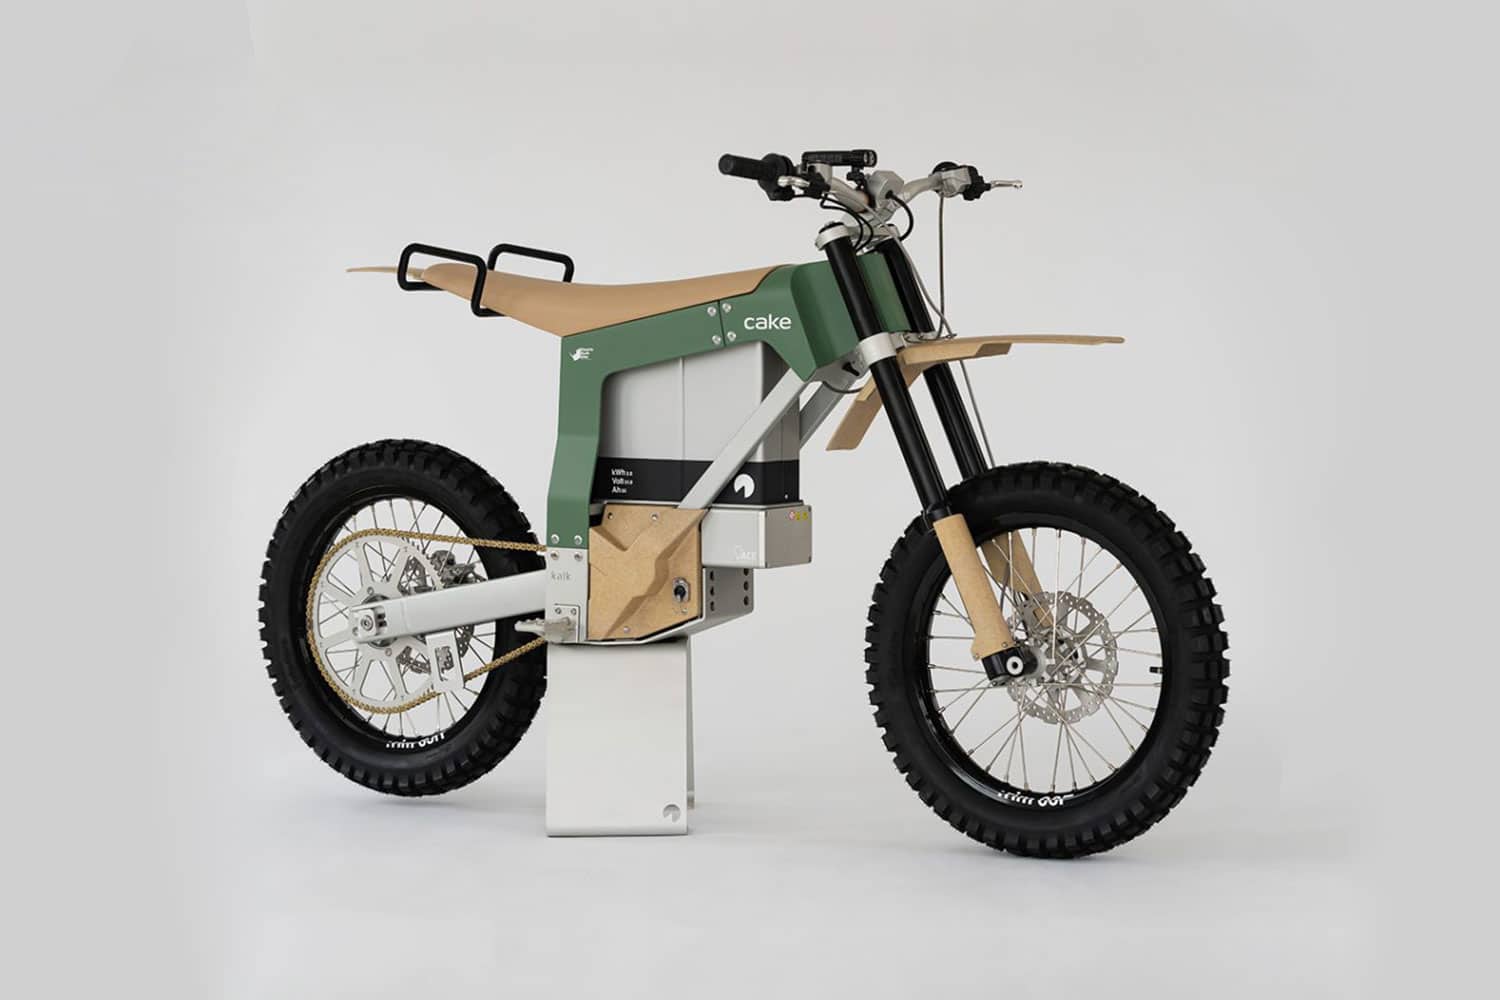 Cake Kalk AP, an electric off-road bike for anti-poaching purposes.